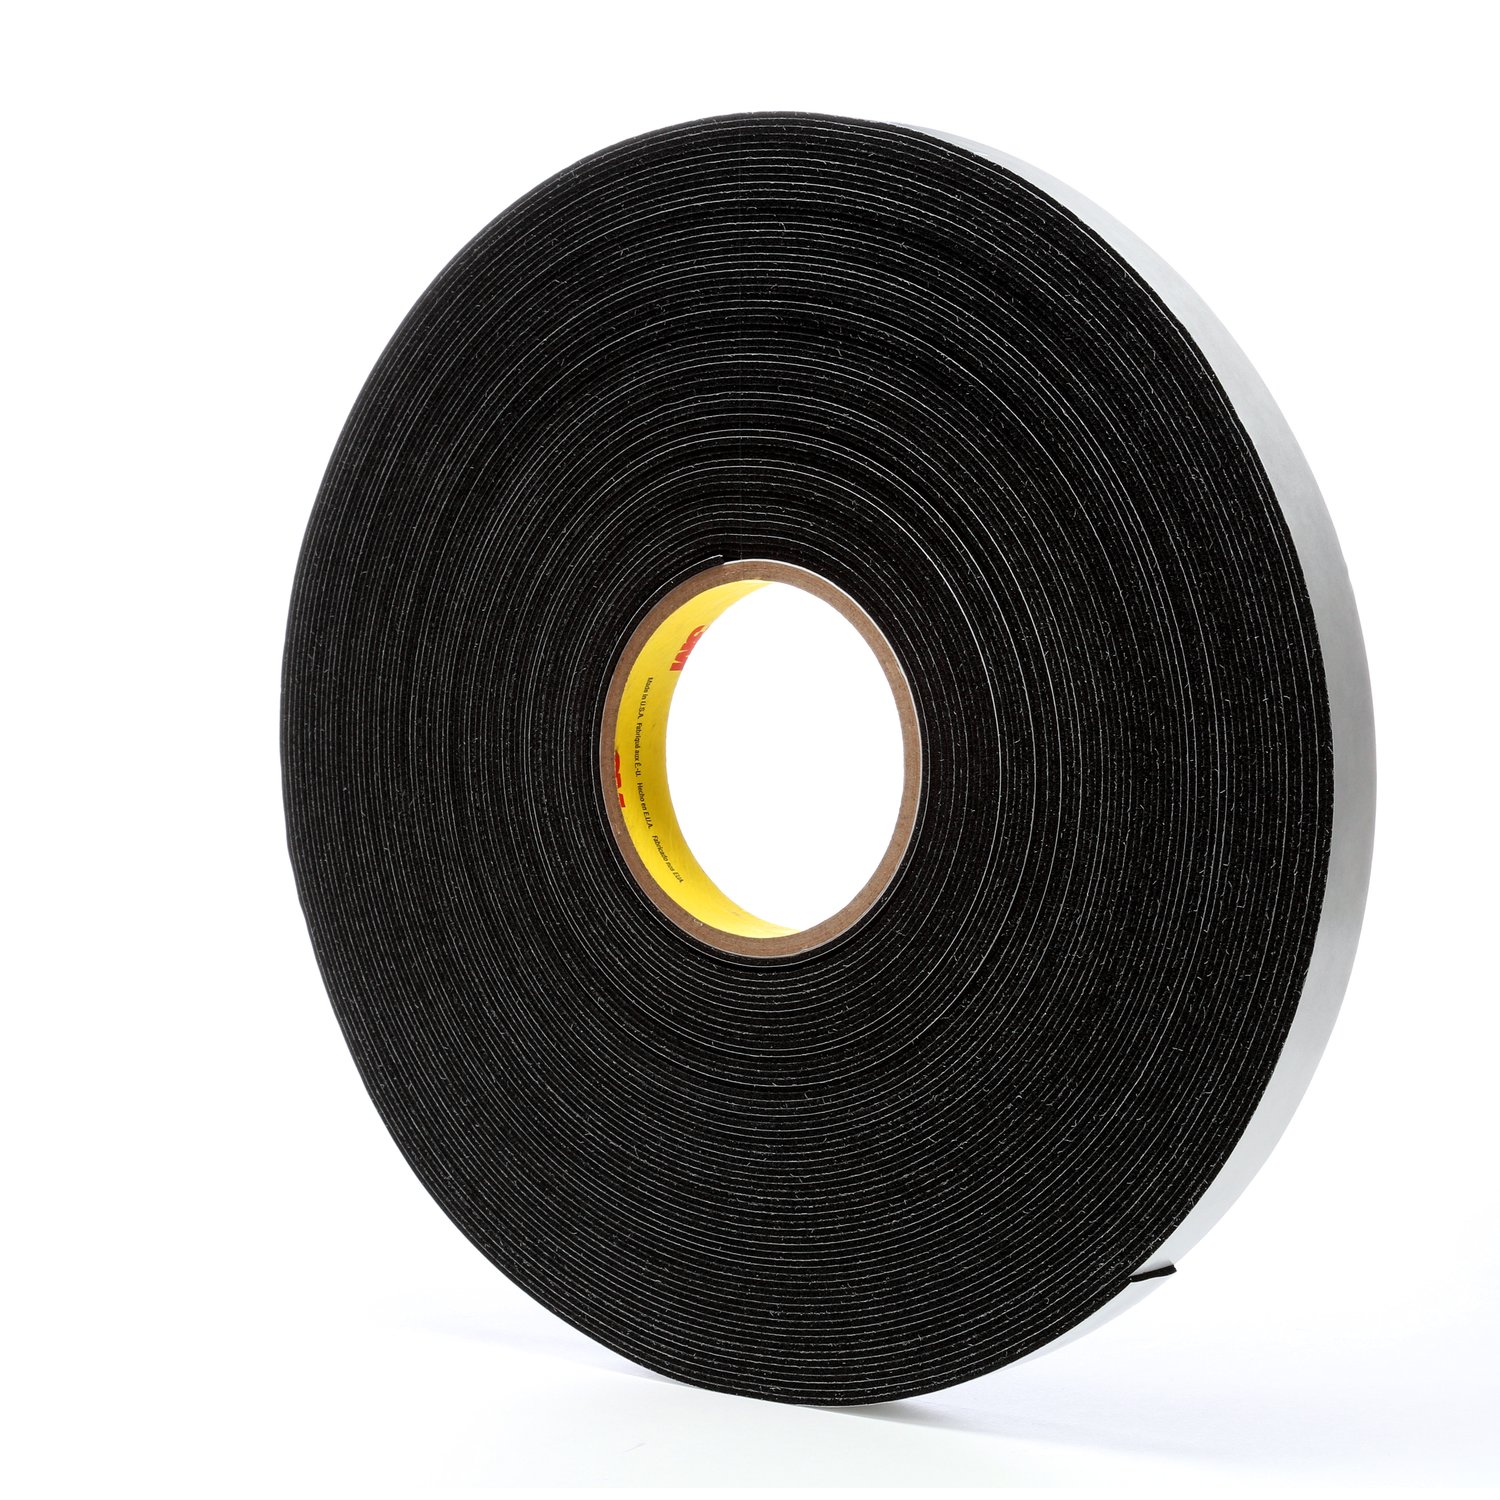 7010313519 - 3M Venture Tape Vinyl Foam Tape 1714, Gray, 3/4 in x 50 ft, 250 mil,
16 rolls per case